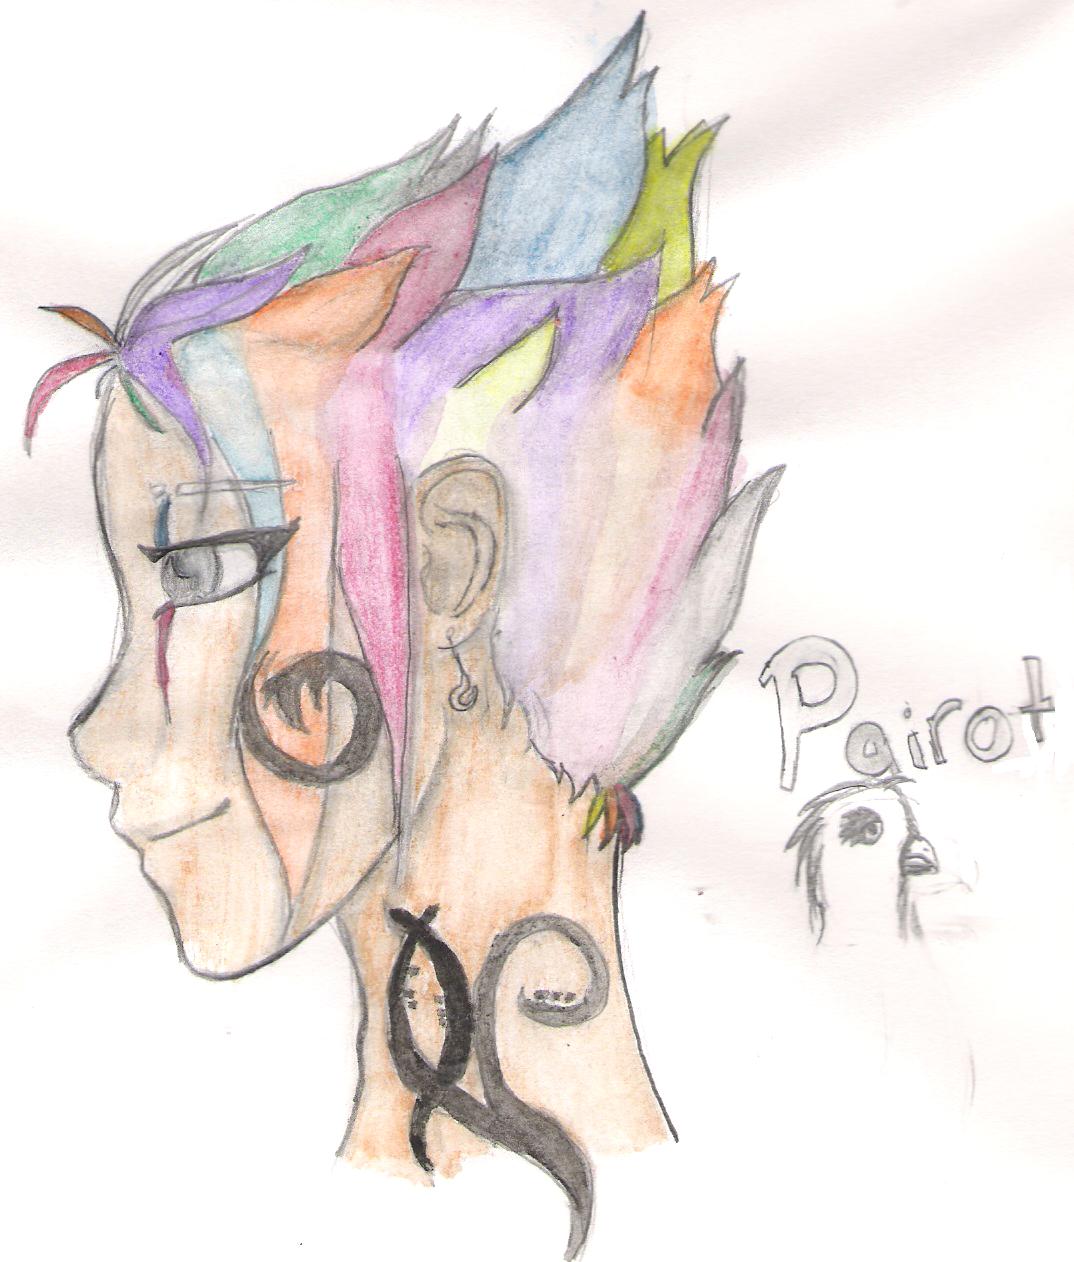 Pairot by BlackFireDemon01